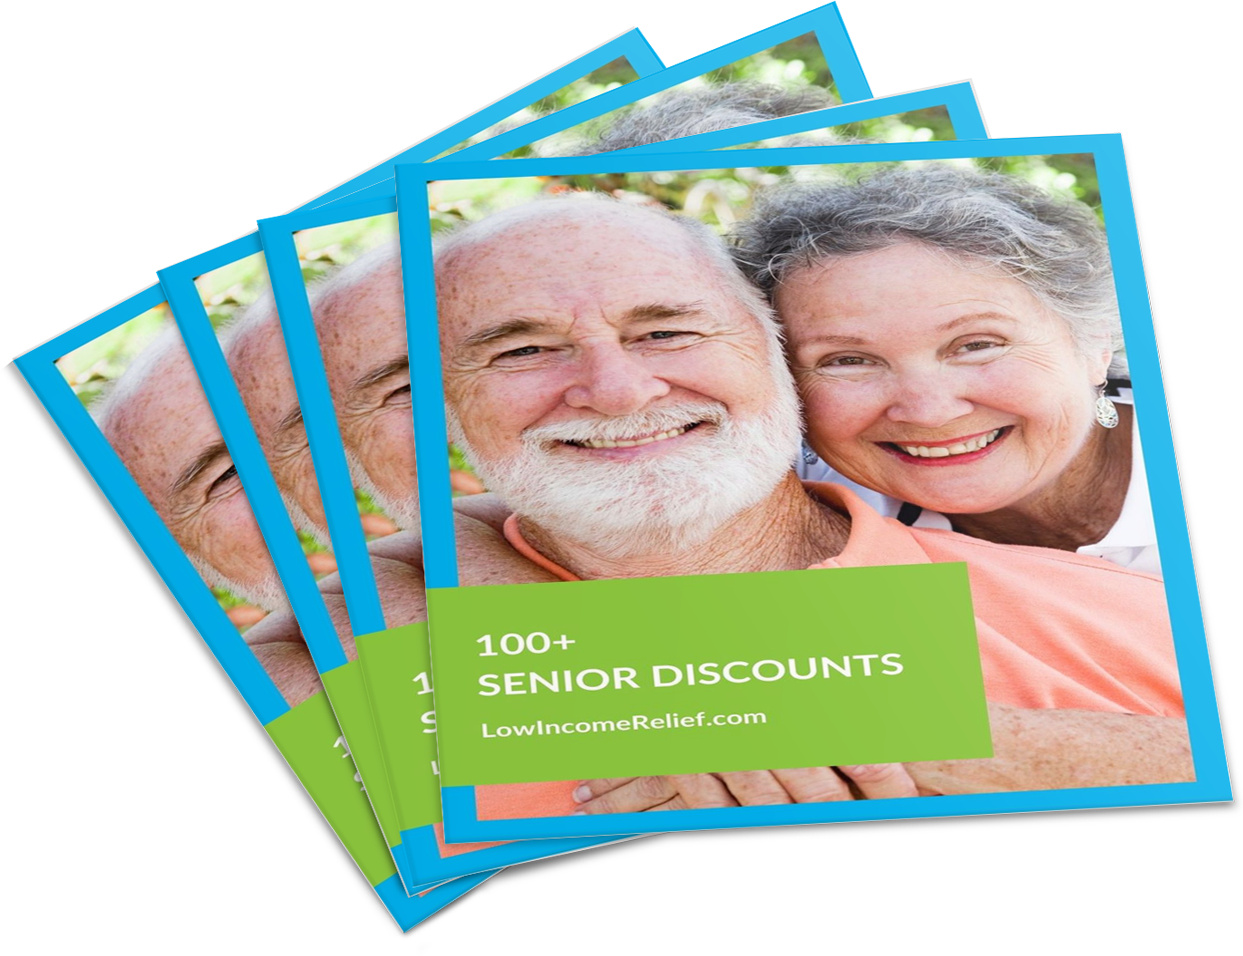 100+ Incredible Senior Discounts [Verified List!] Low Relief